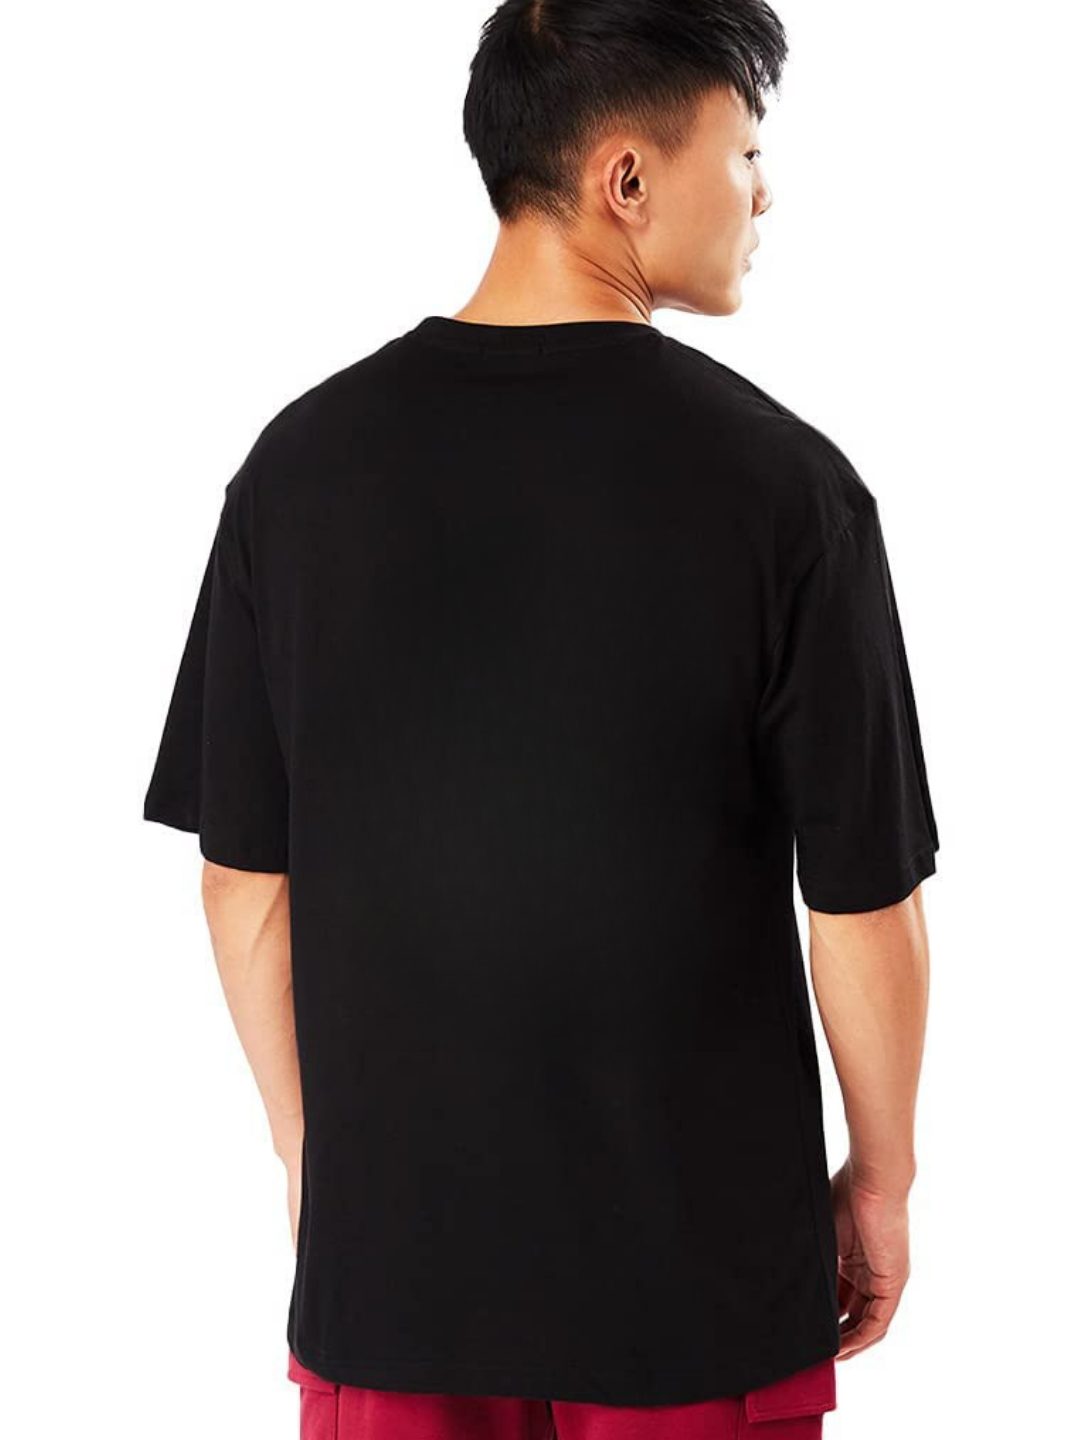 Berserki Oversized T-Shirt - Black